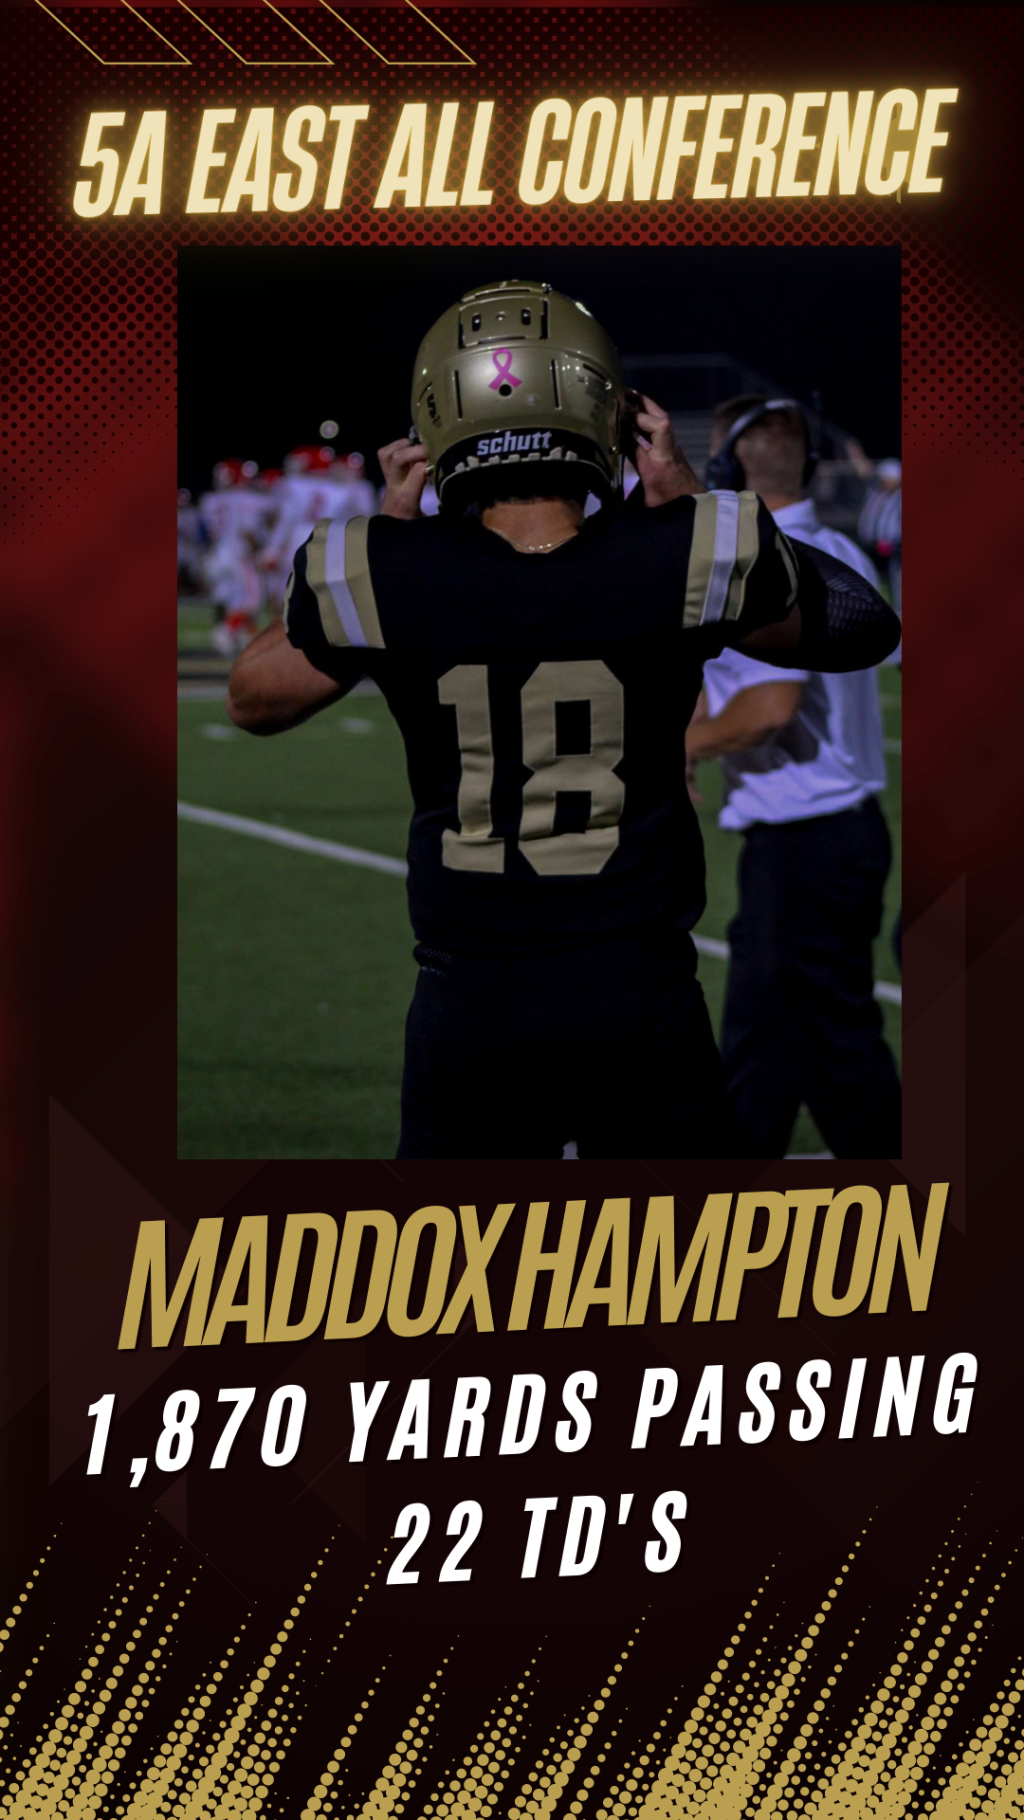 Maddox Hampton